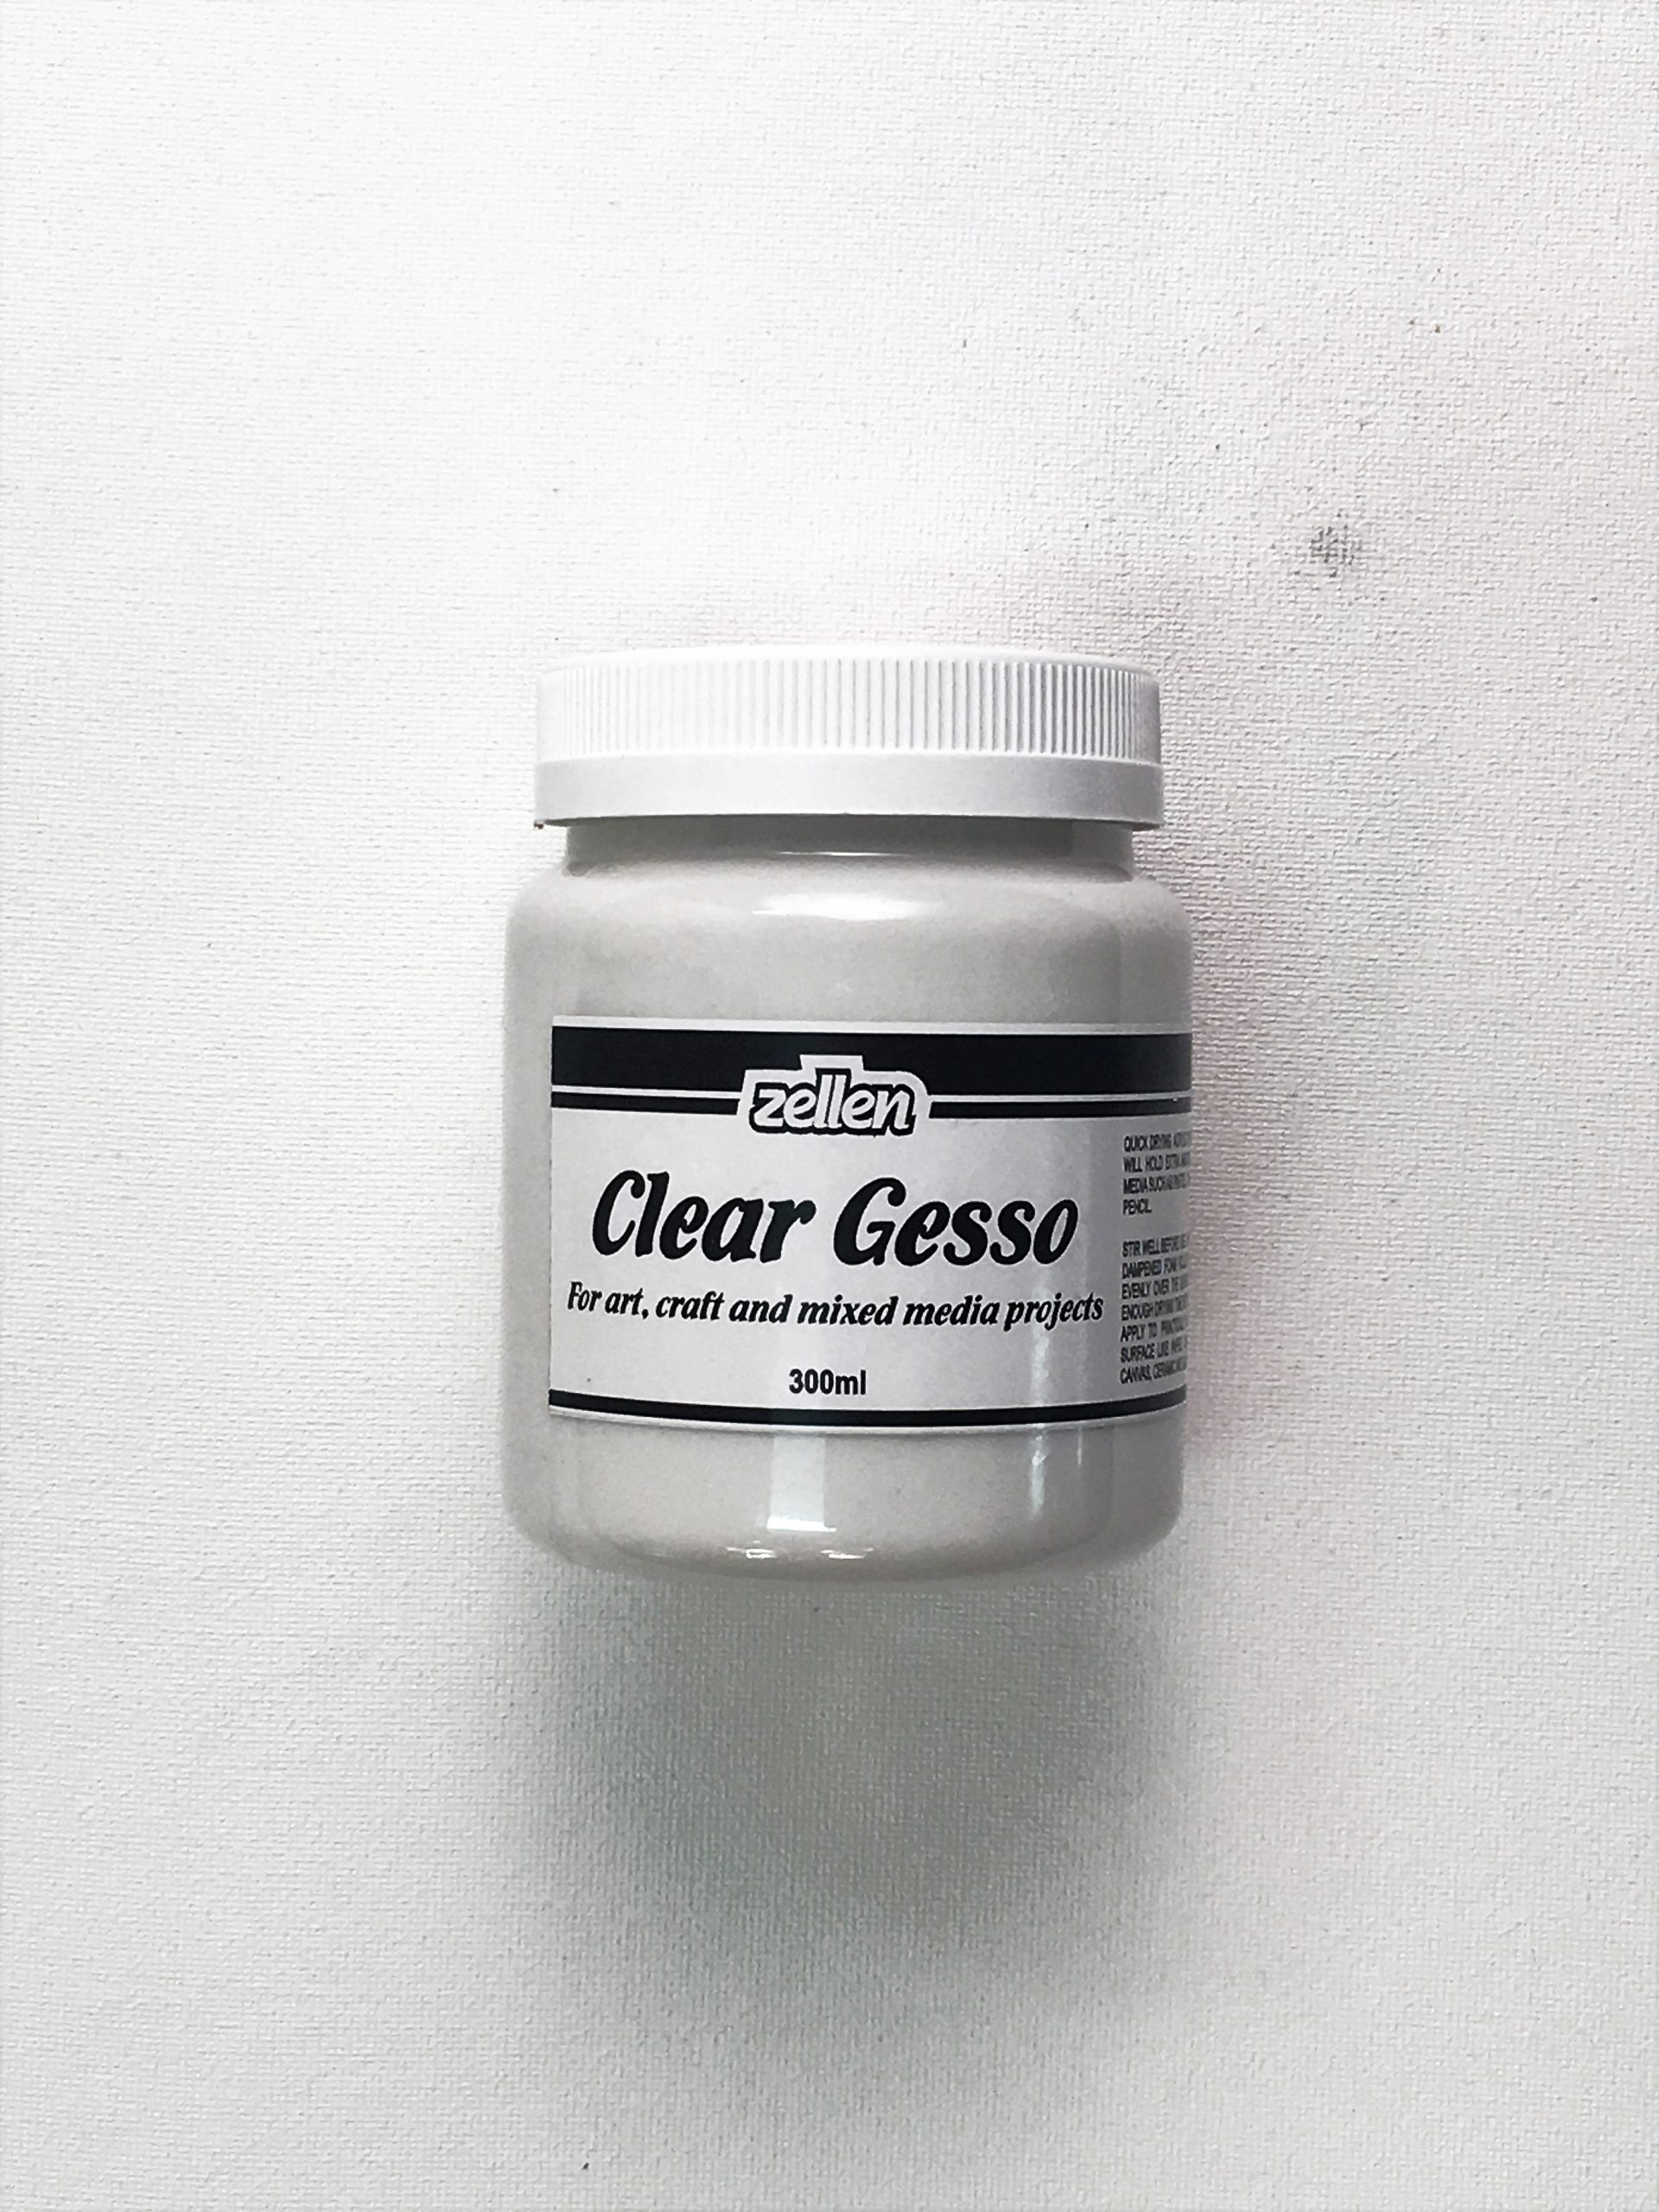 Clear gesso - Zellen - Crafty Arts